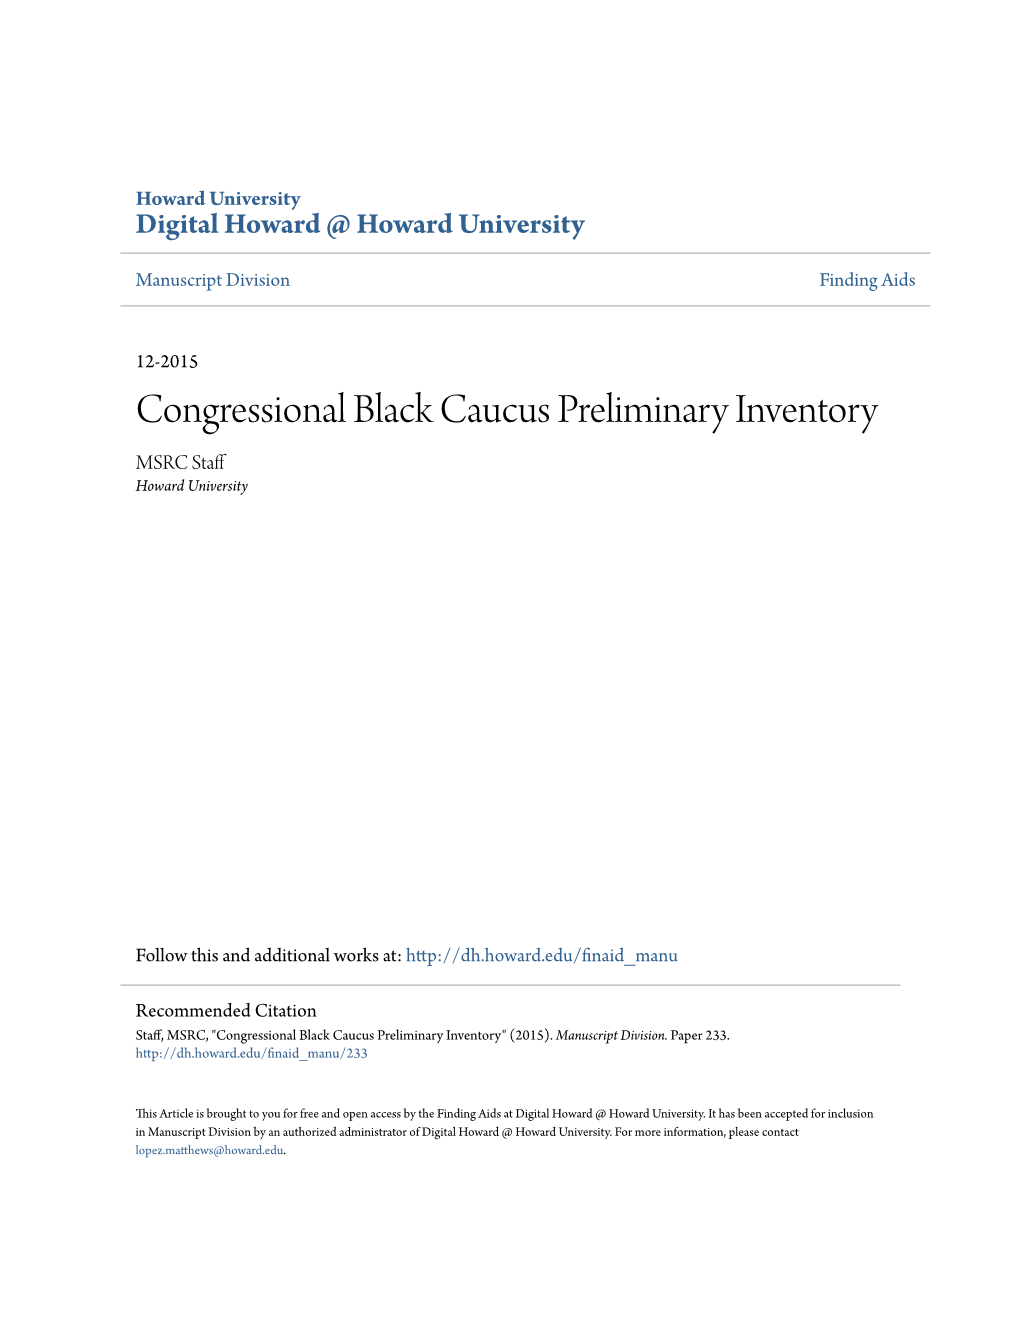 Congressional Black Caucus Preliminary Inventory MSRC Staff Howard University